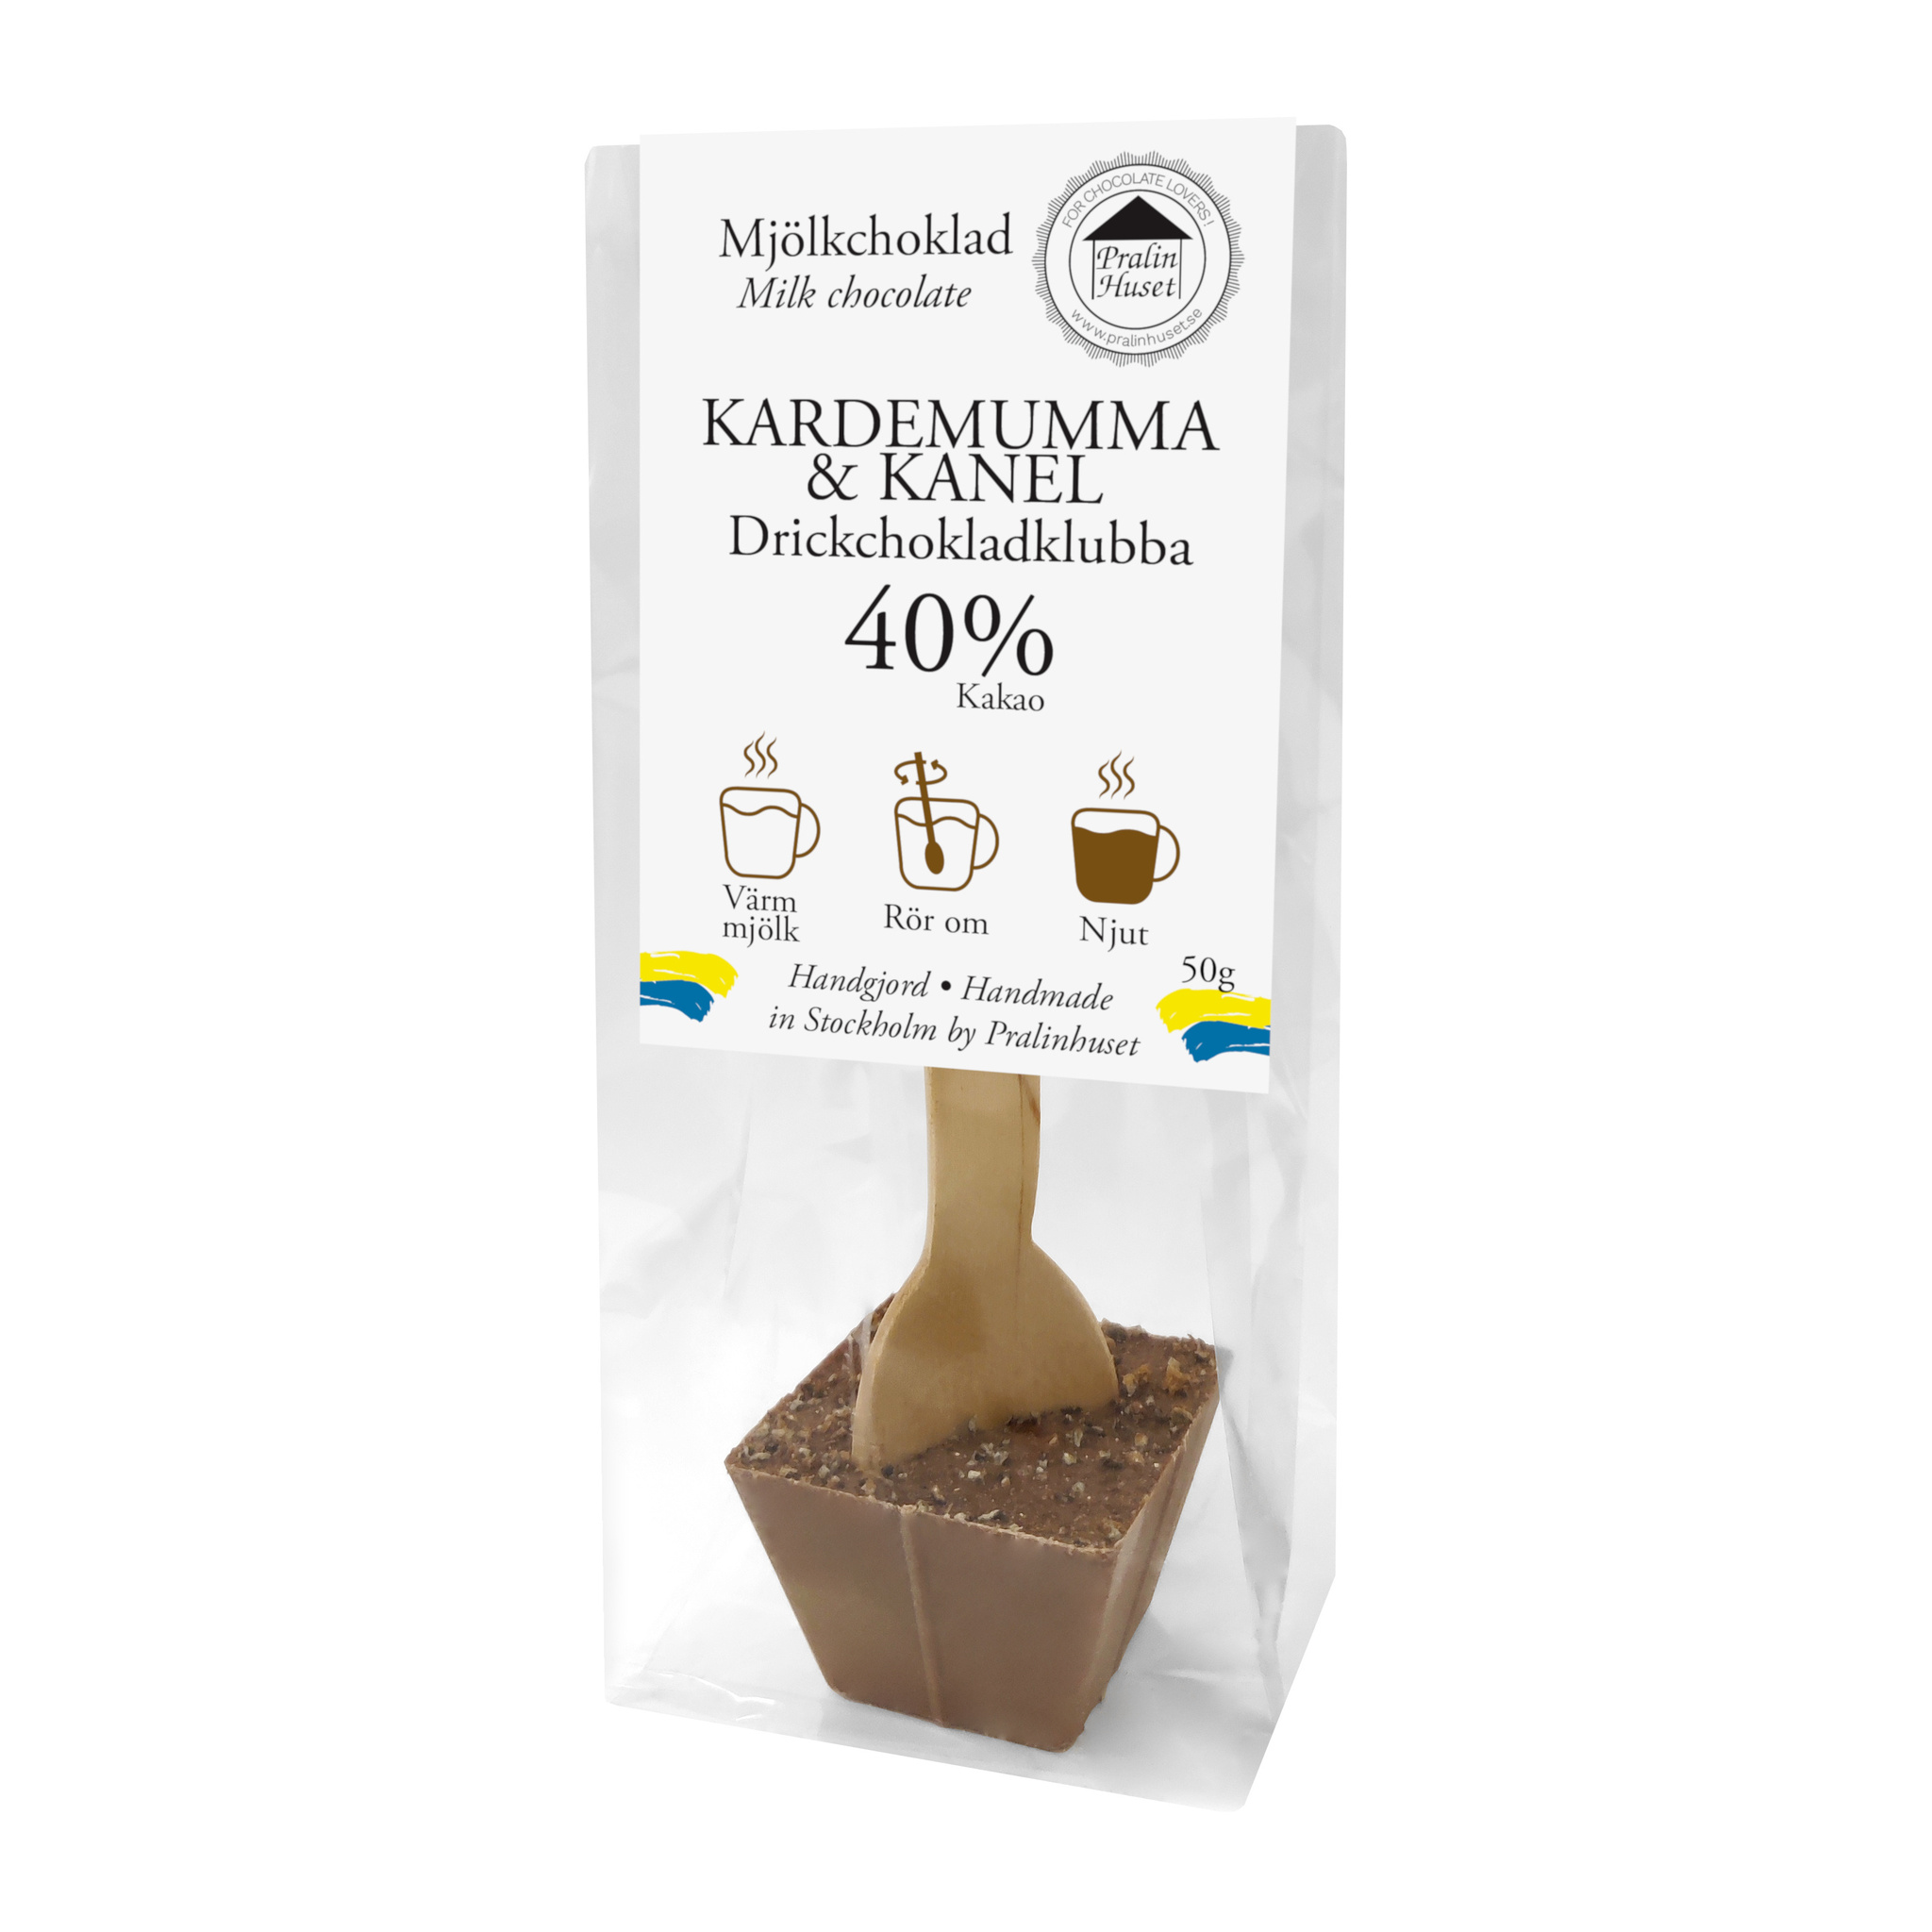 Pralinhuset - Drickchoklad - 40% Kakao - Kanel & Kardemumma